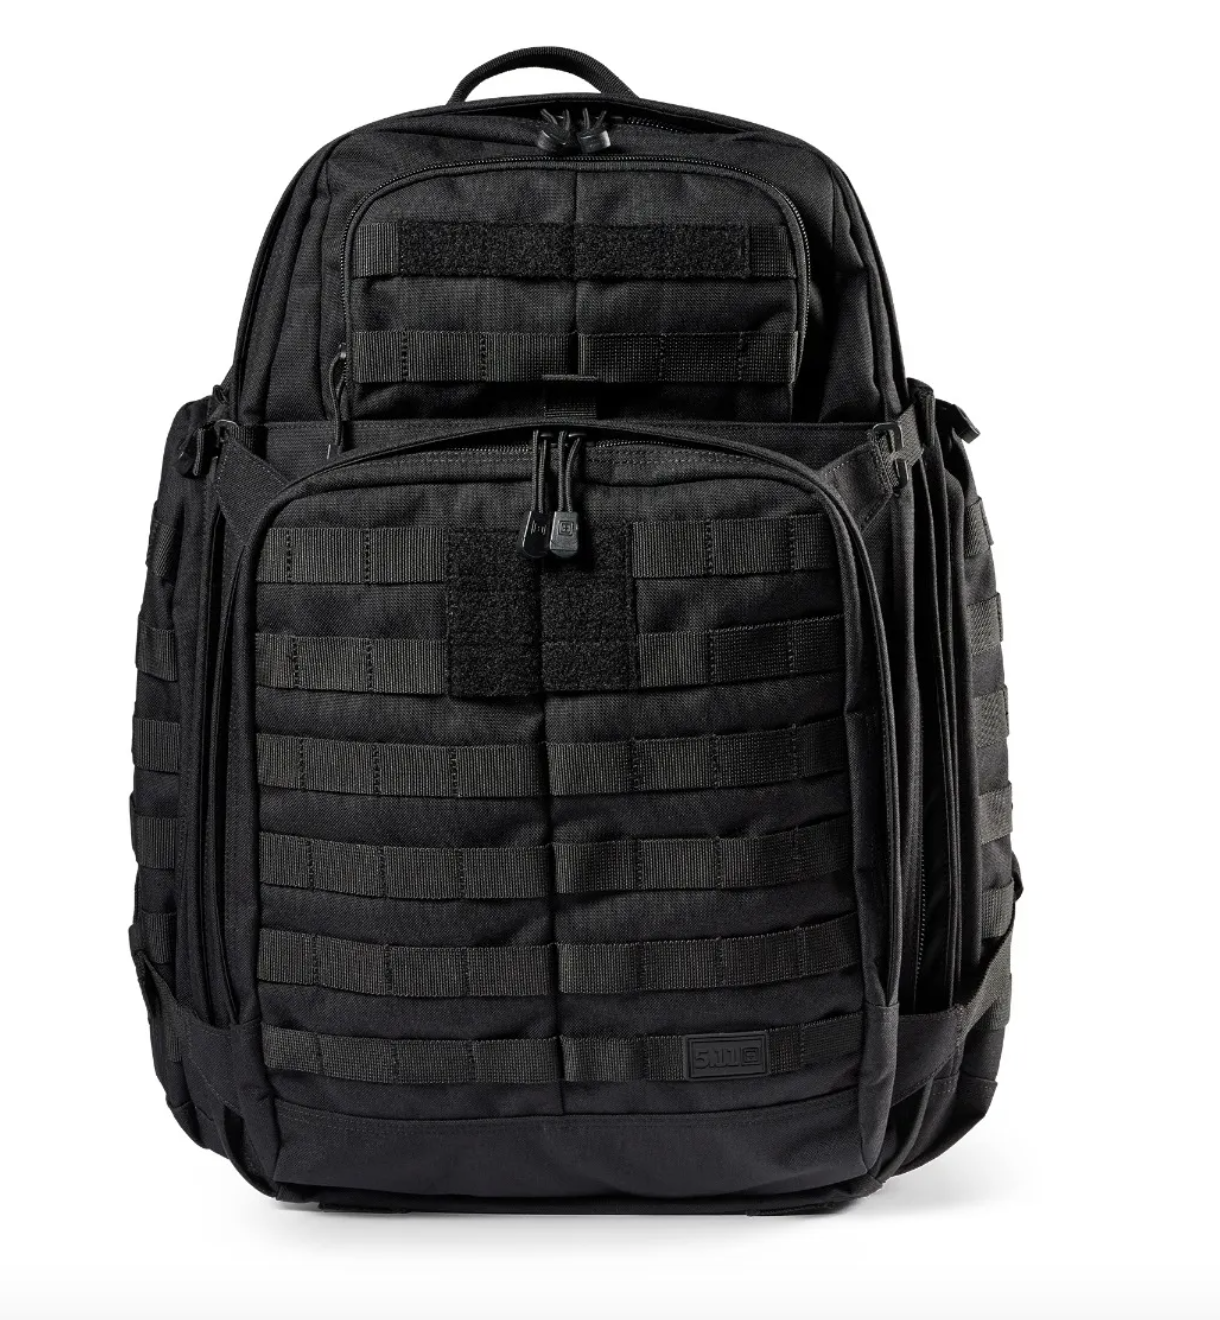 5.11 - Rush72 2.0 - Backpack 55L - Black (019)